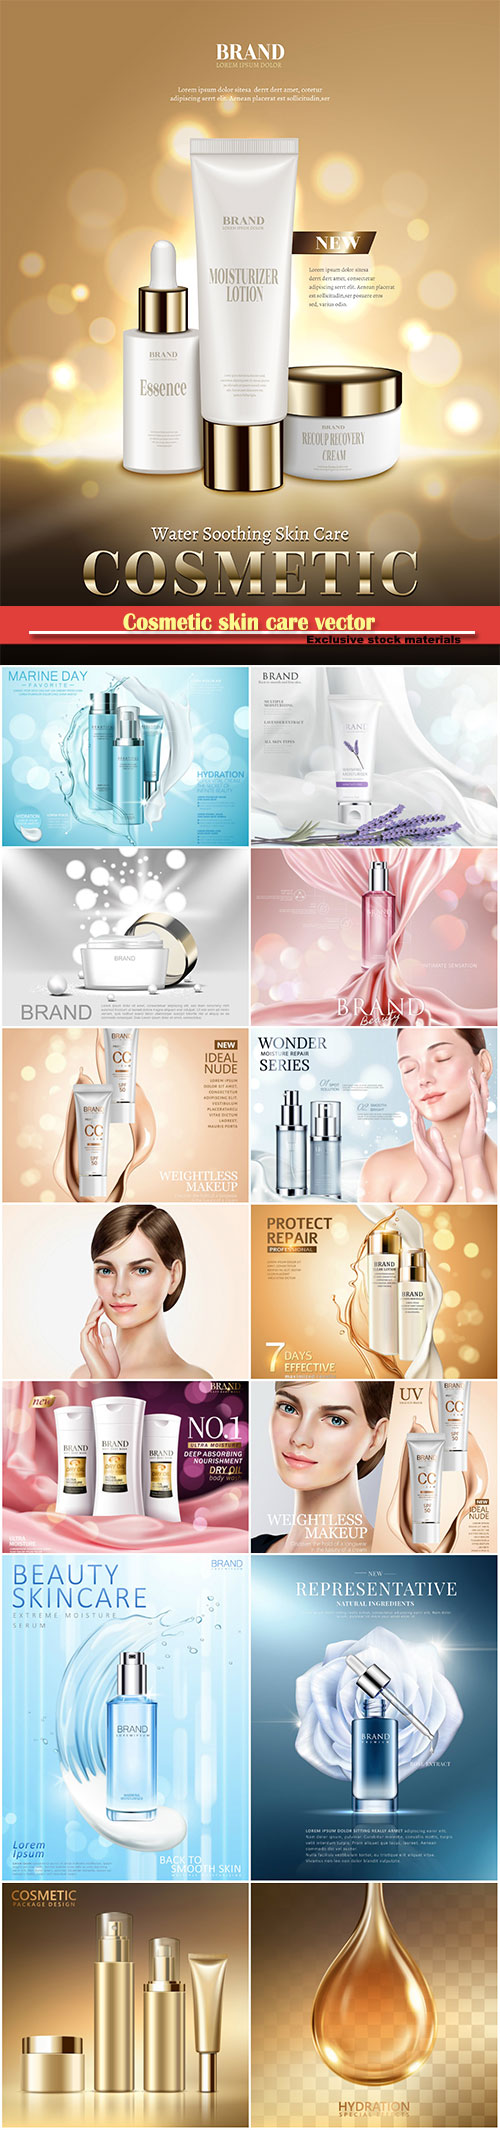 Cosmetic skin care vector, moisturizing cream in 3d illustration